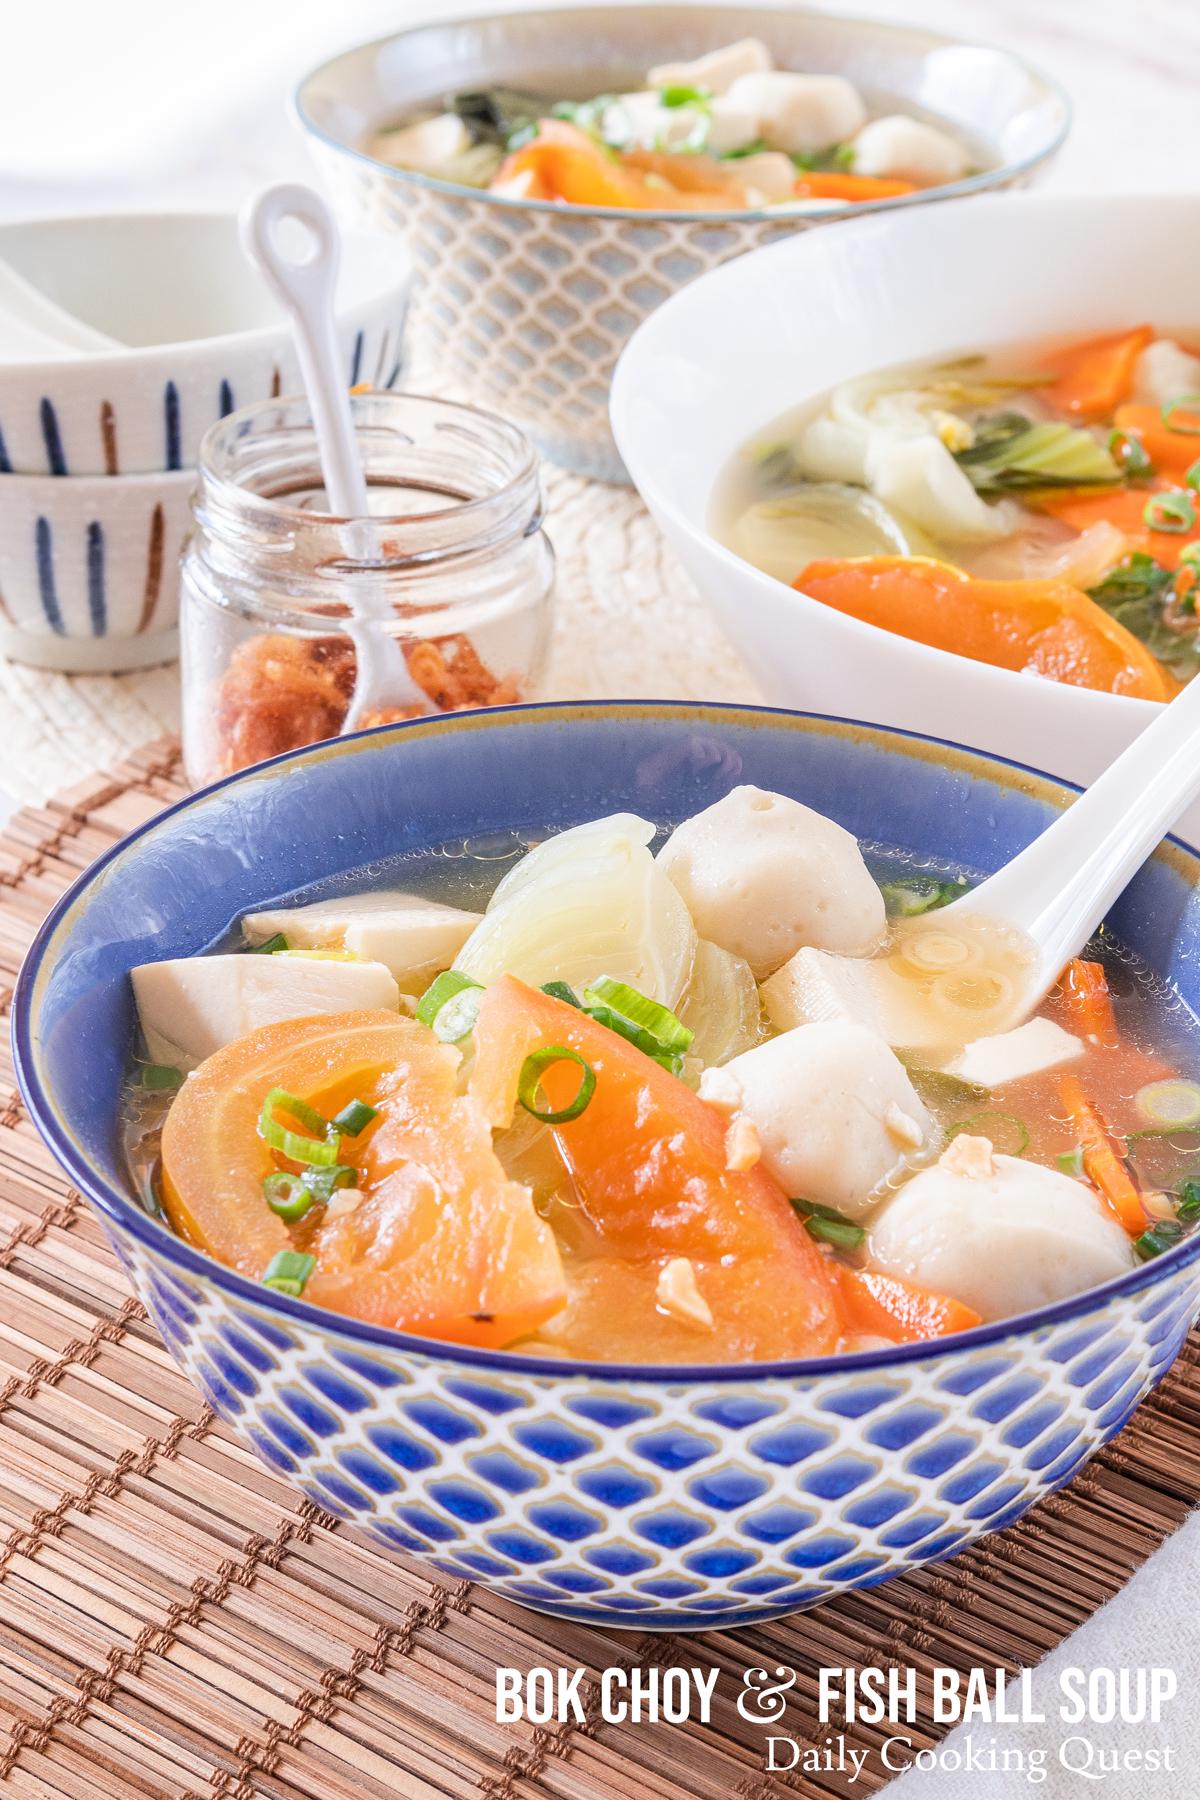 Bok choy and fish ball soup.